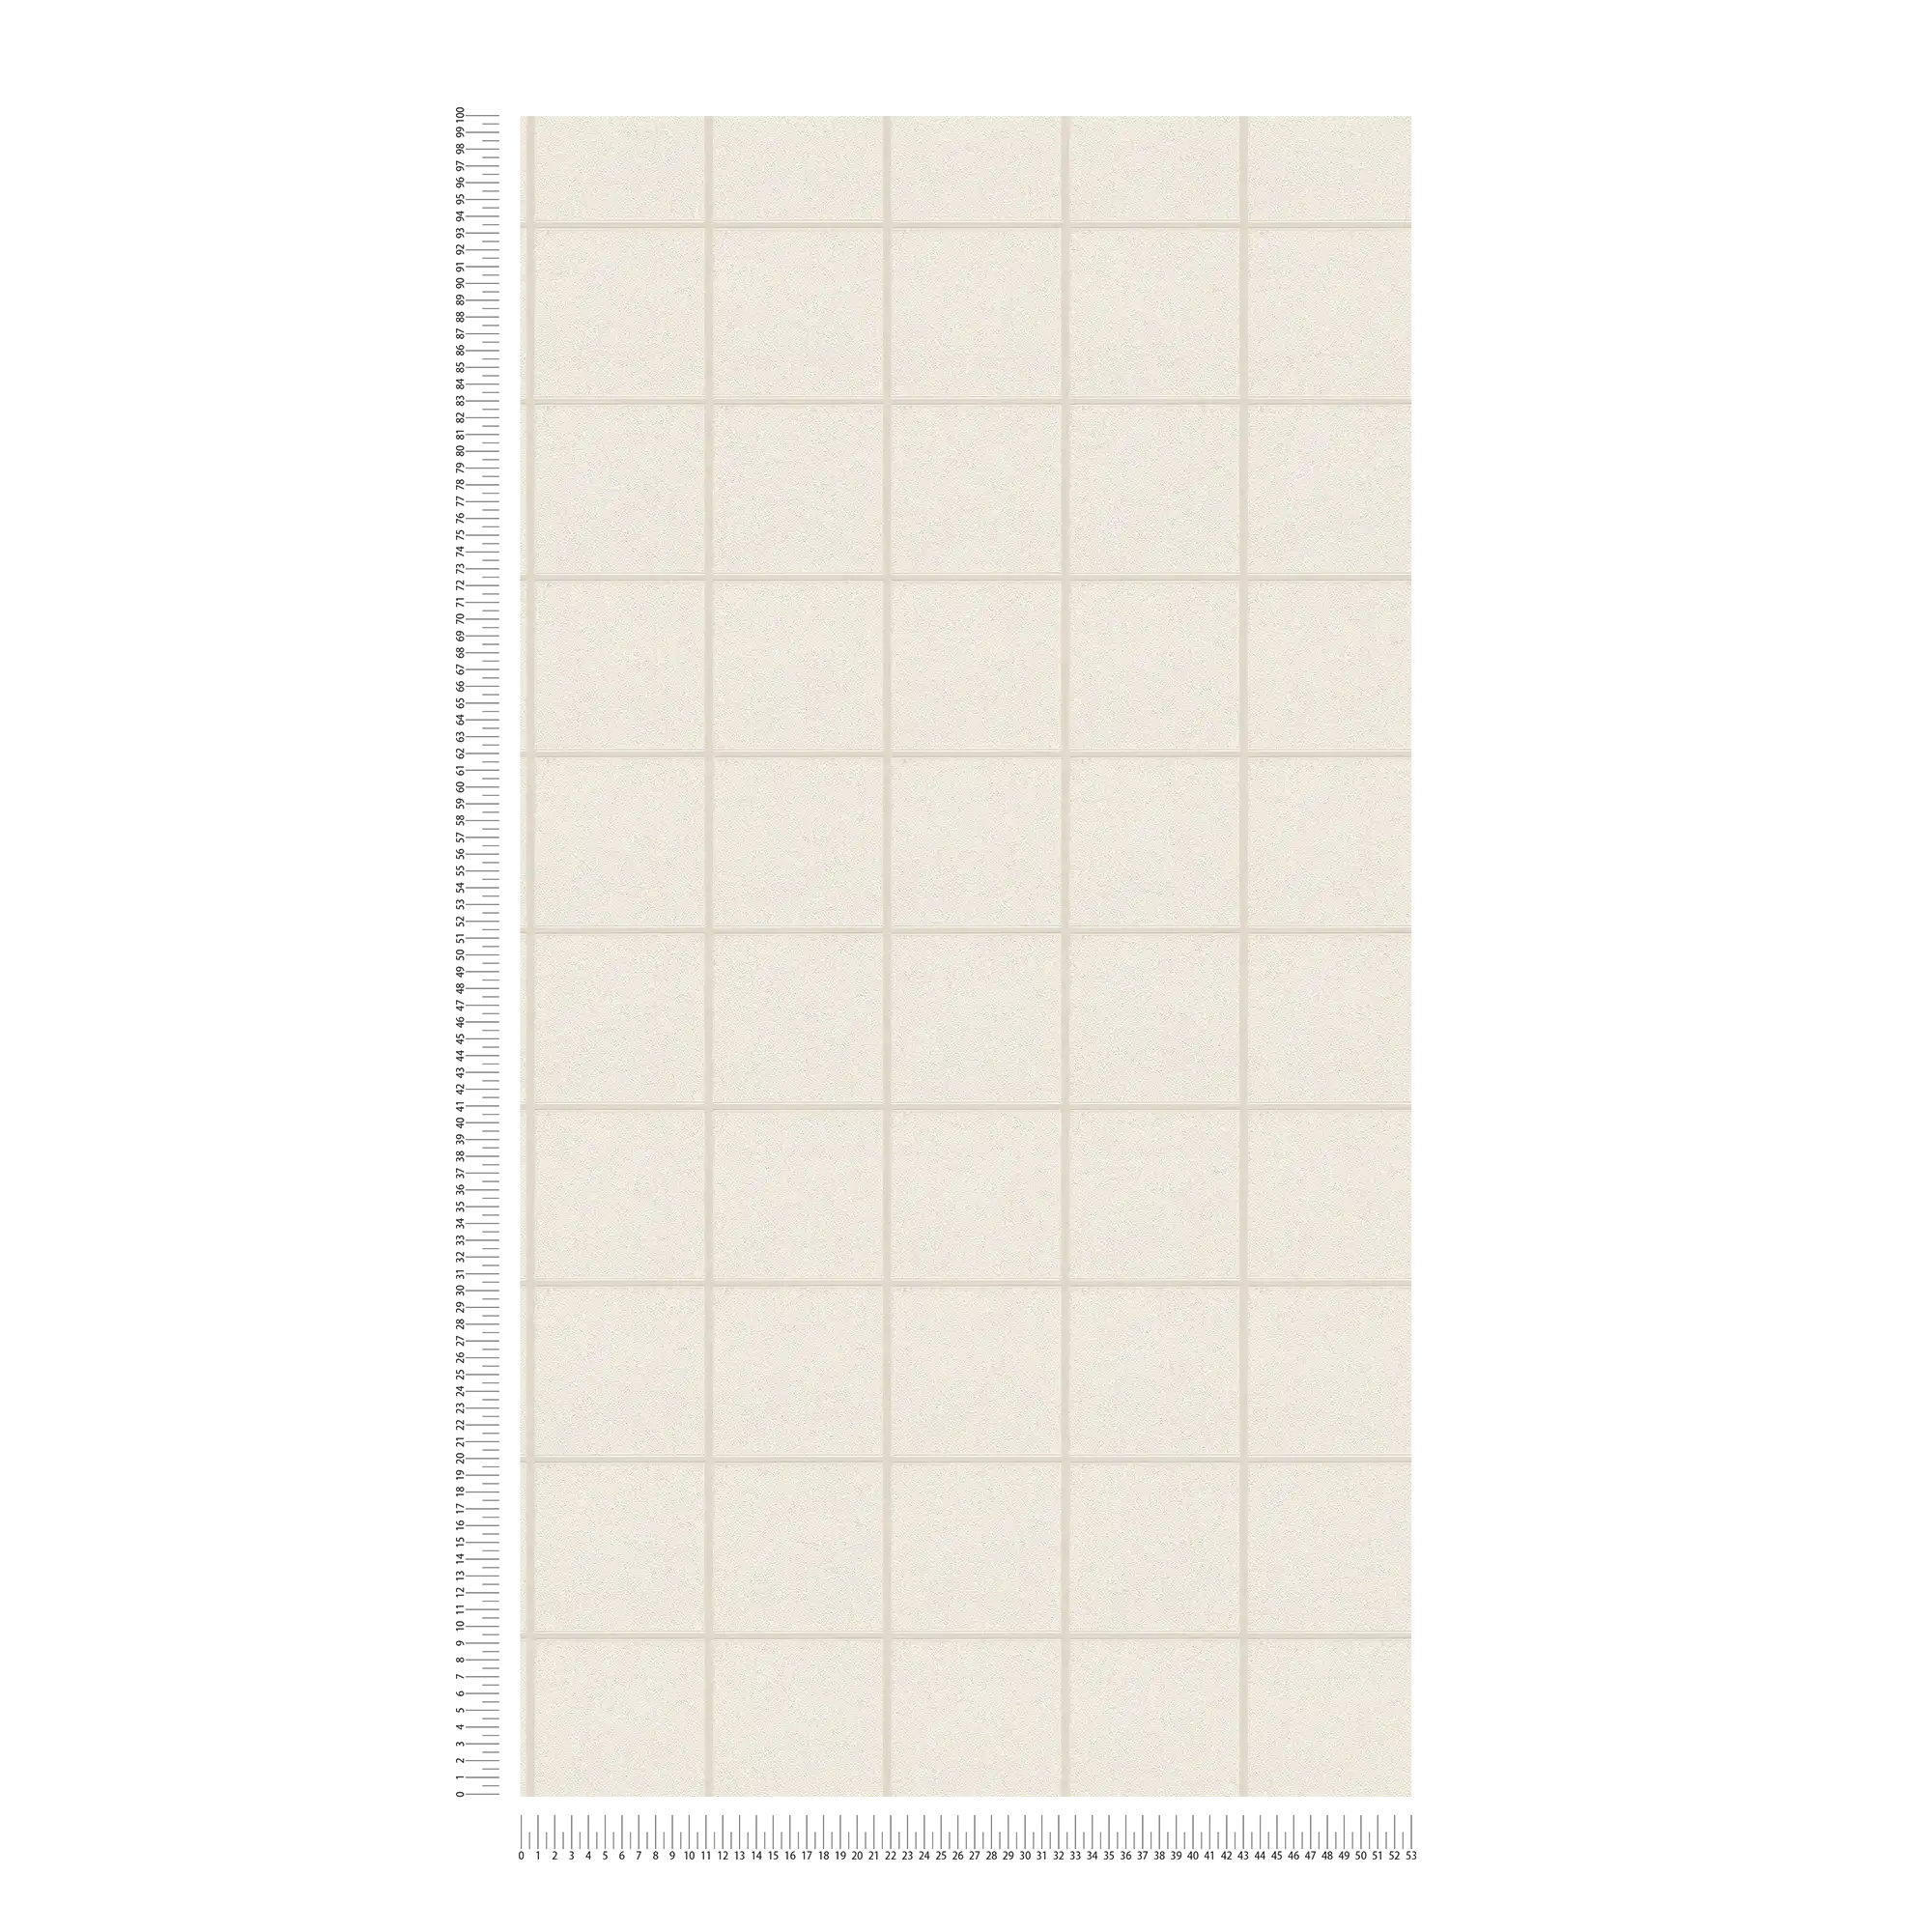             Wallpaper tile pattern, dark joints & 3D effect - Silver, White
        